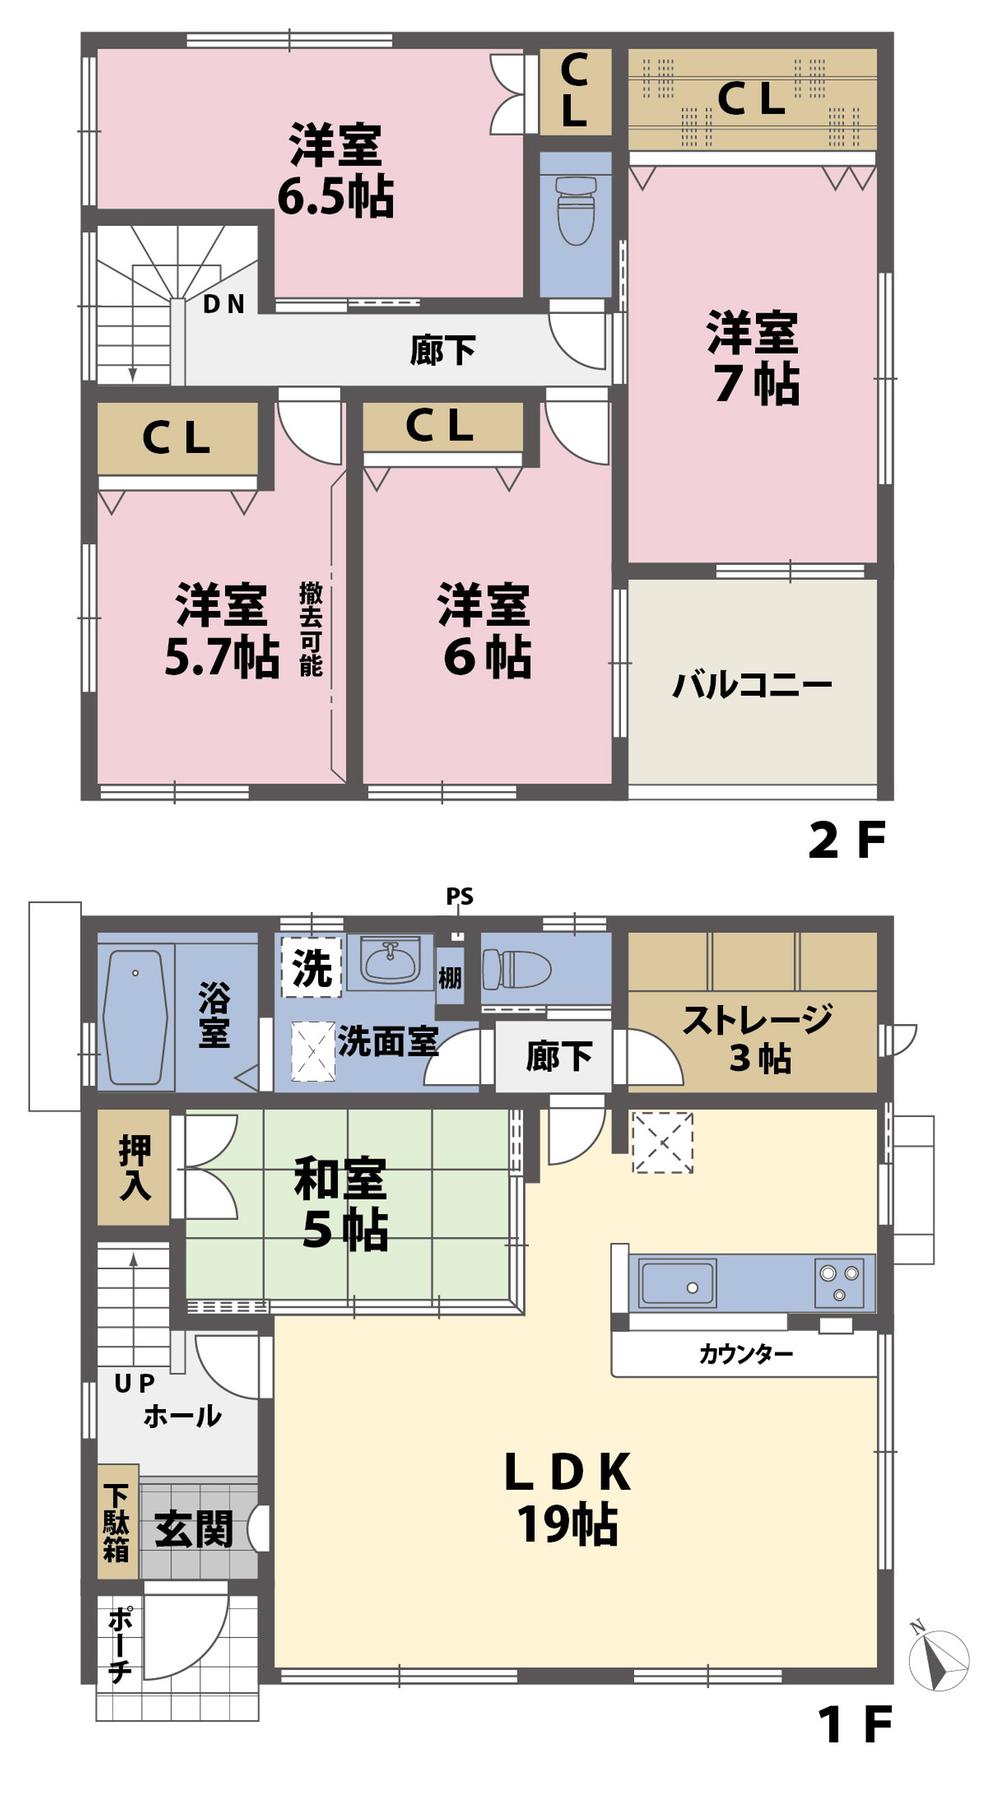 Floor plan. (No.4), Price 25,980,000 yen, 5LDK, Land area 139.25 sq m , Building area 116.4 sq m